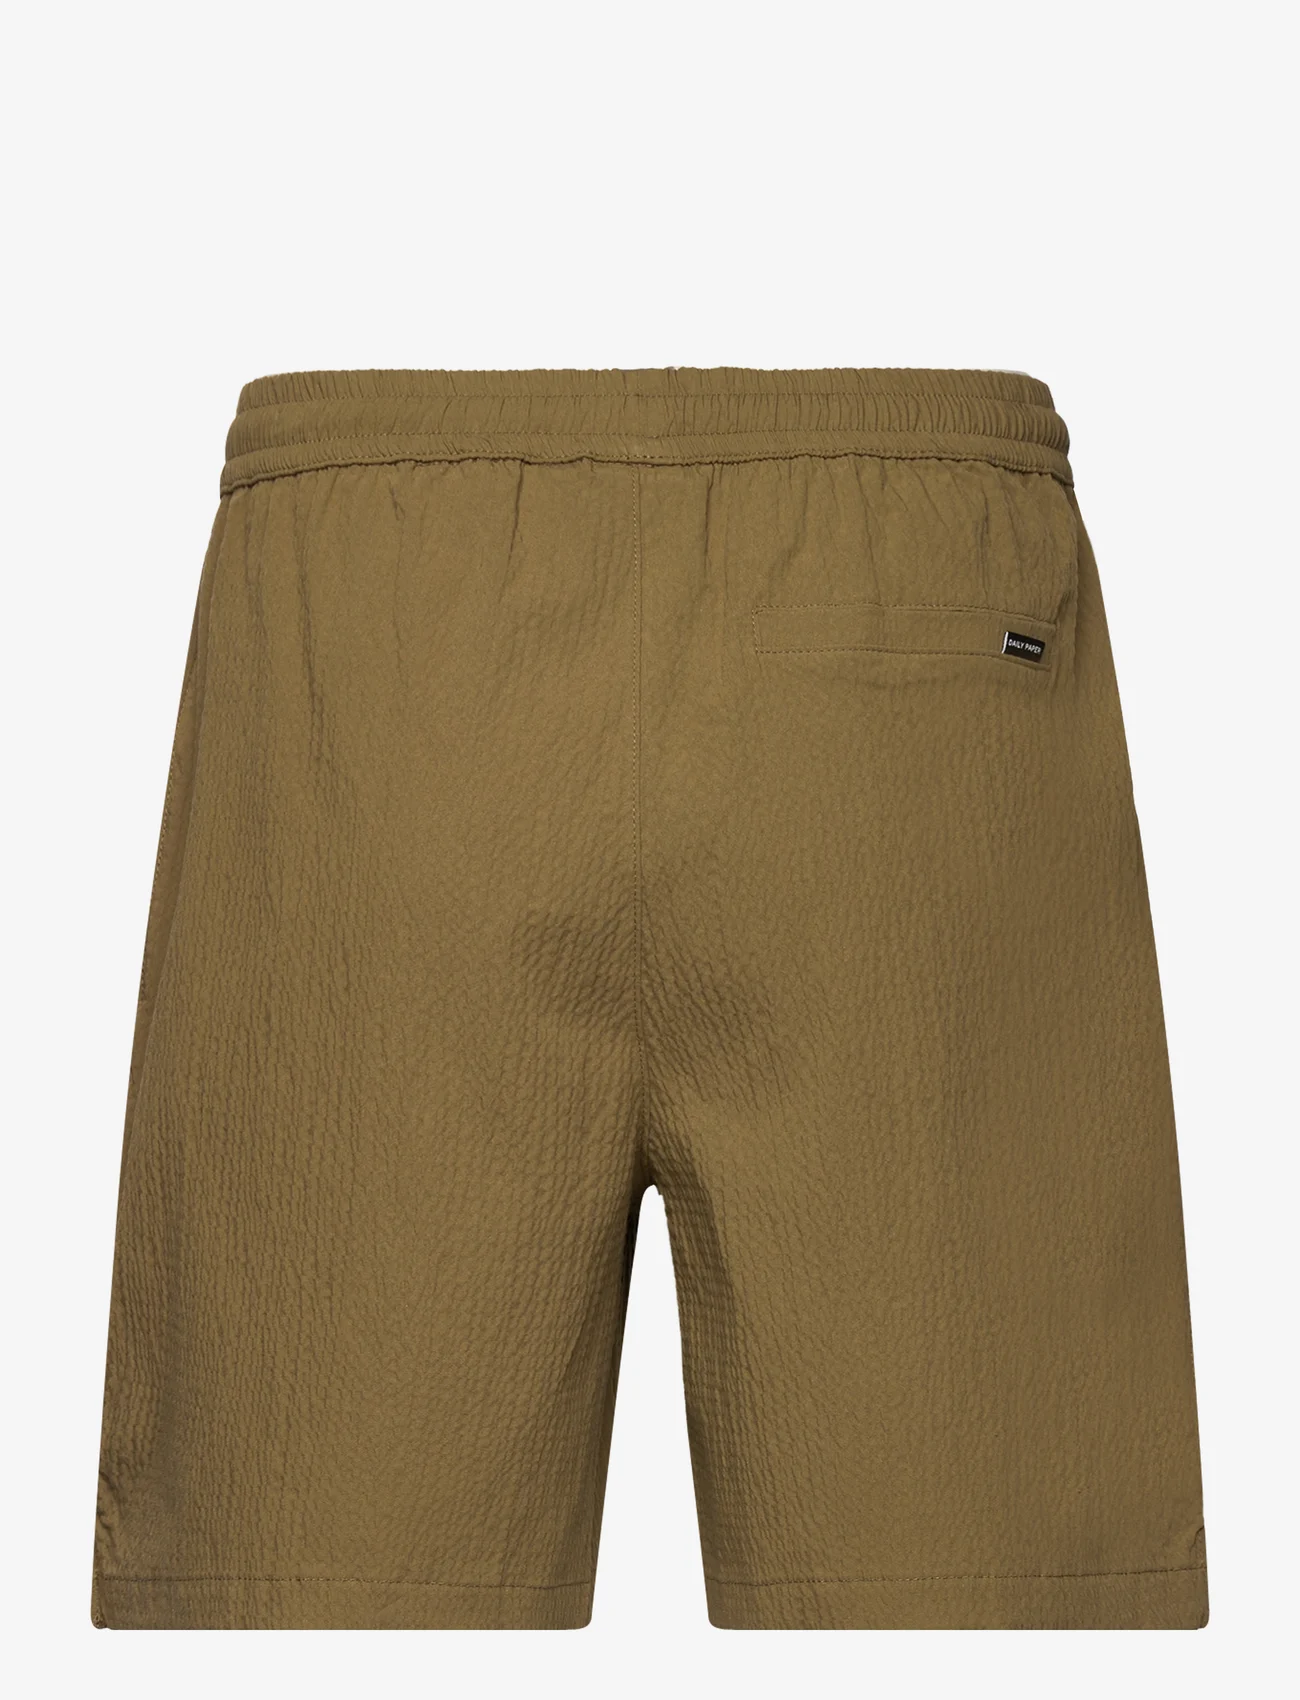 Daily Paper - pinira shorts - clover green - 1